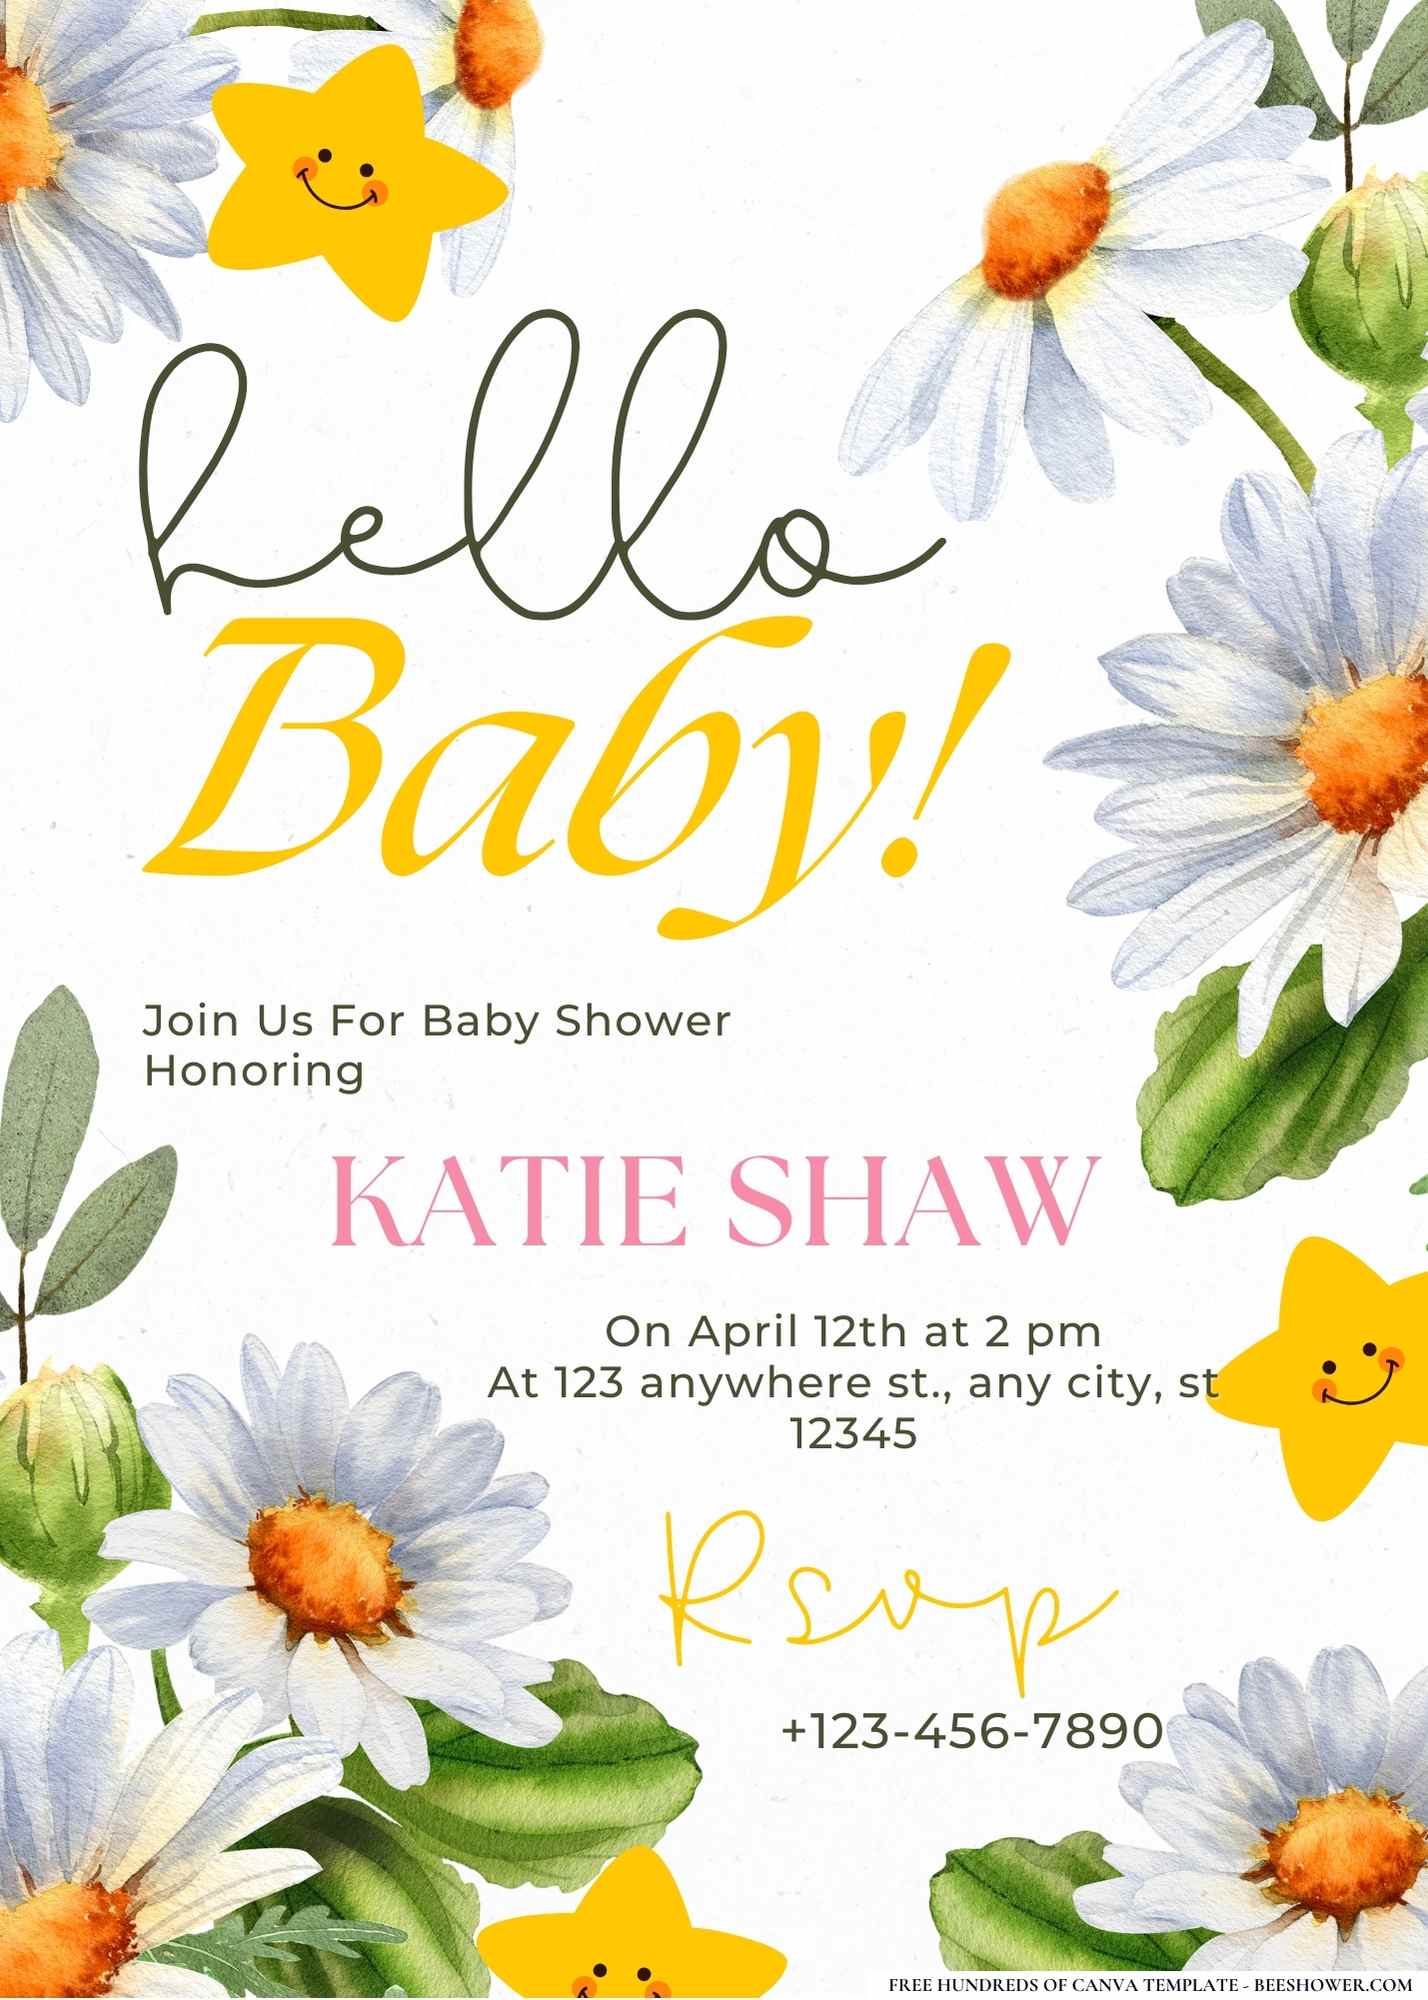 Daisy's Little Debut Baby Shower Invitation